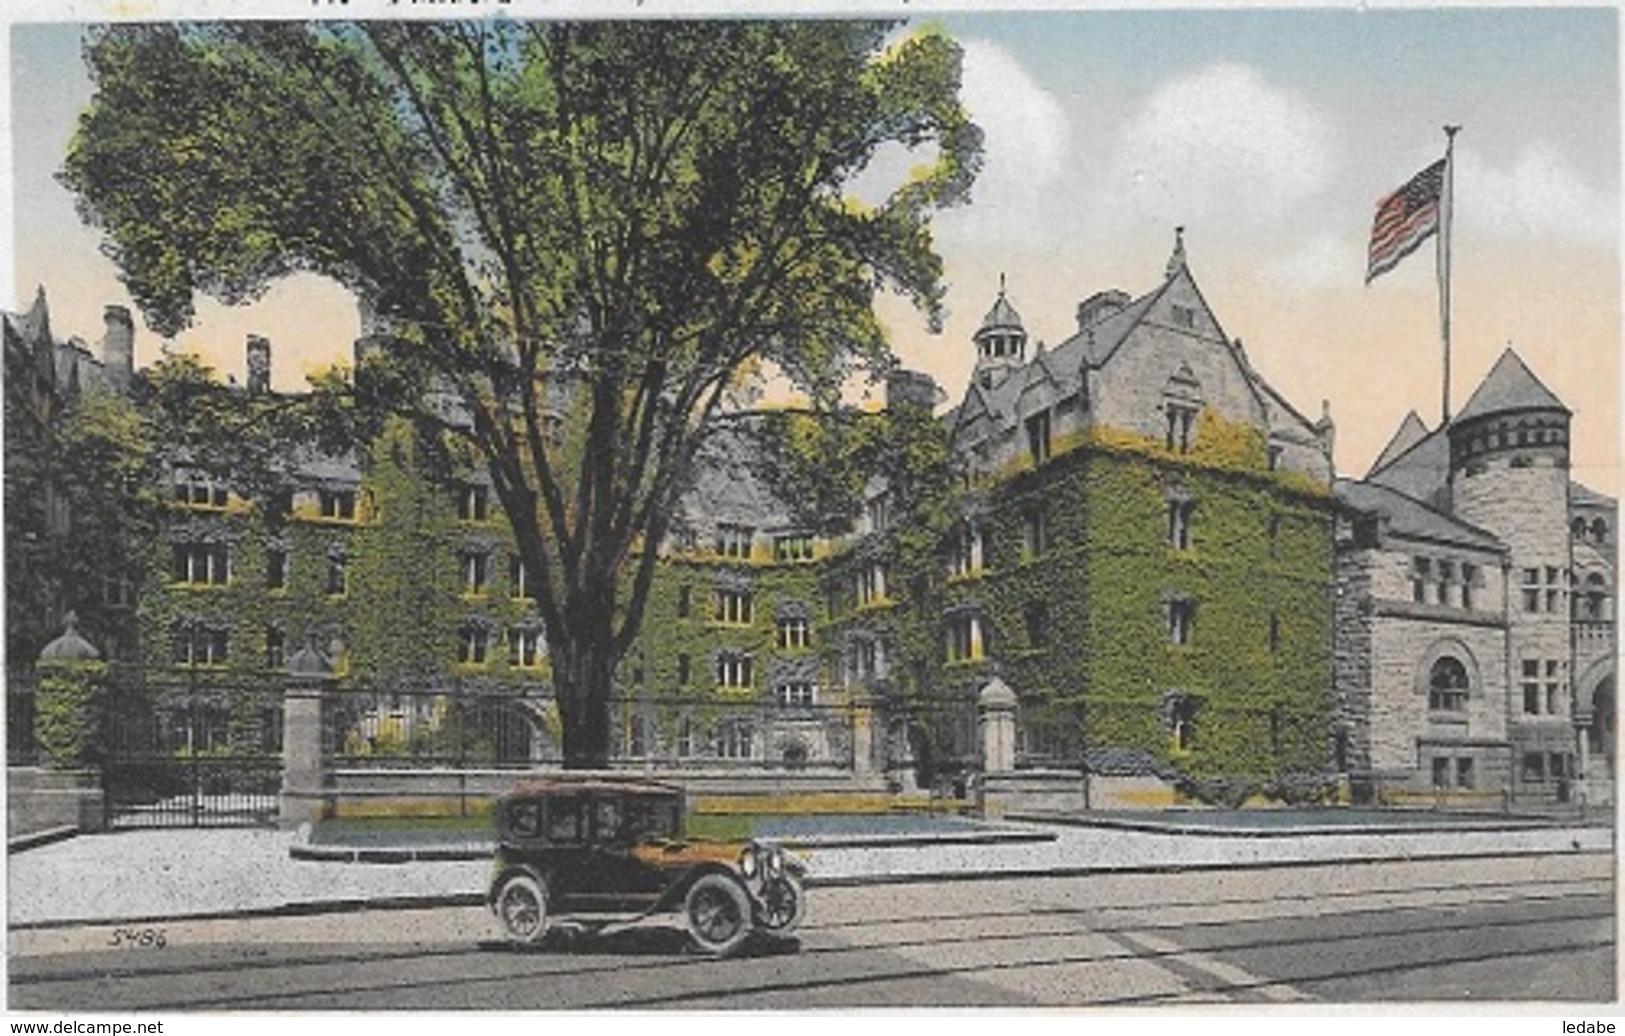 18-167 CPA NEW HAVEN, Vanderbilt Hall, YALE University, écrite, Bon état - New Haven